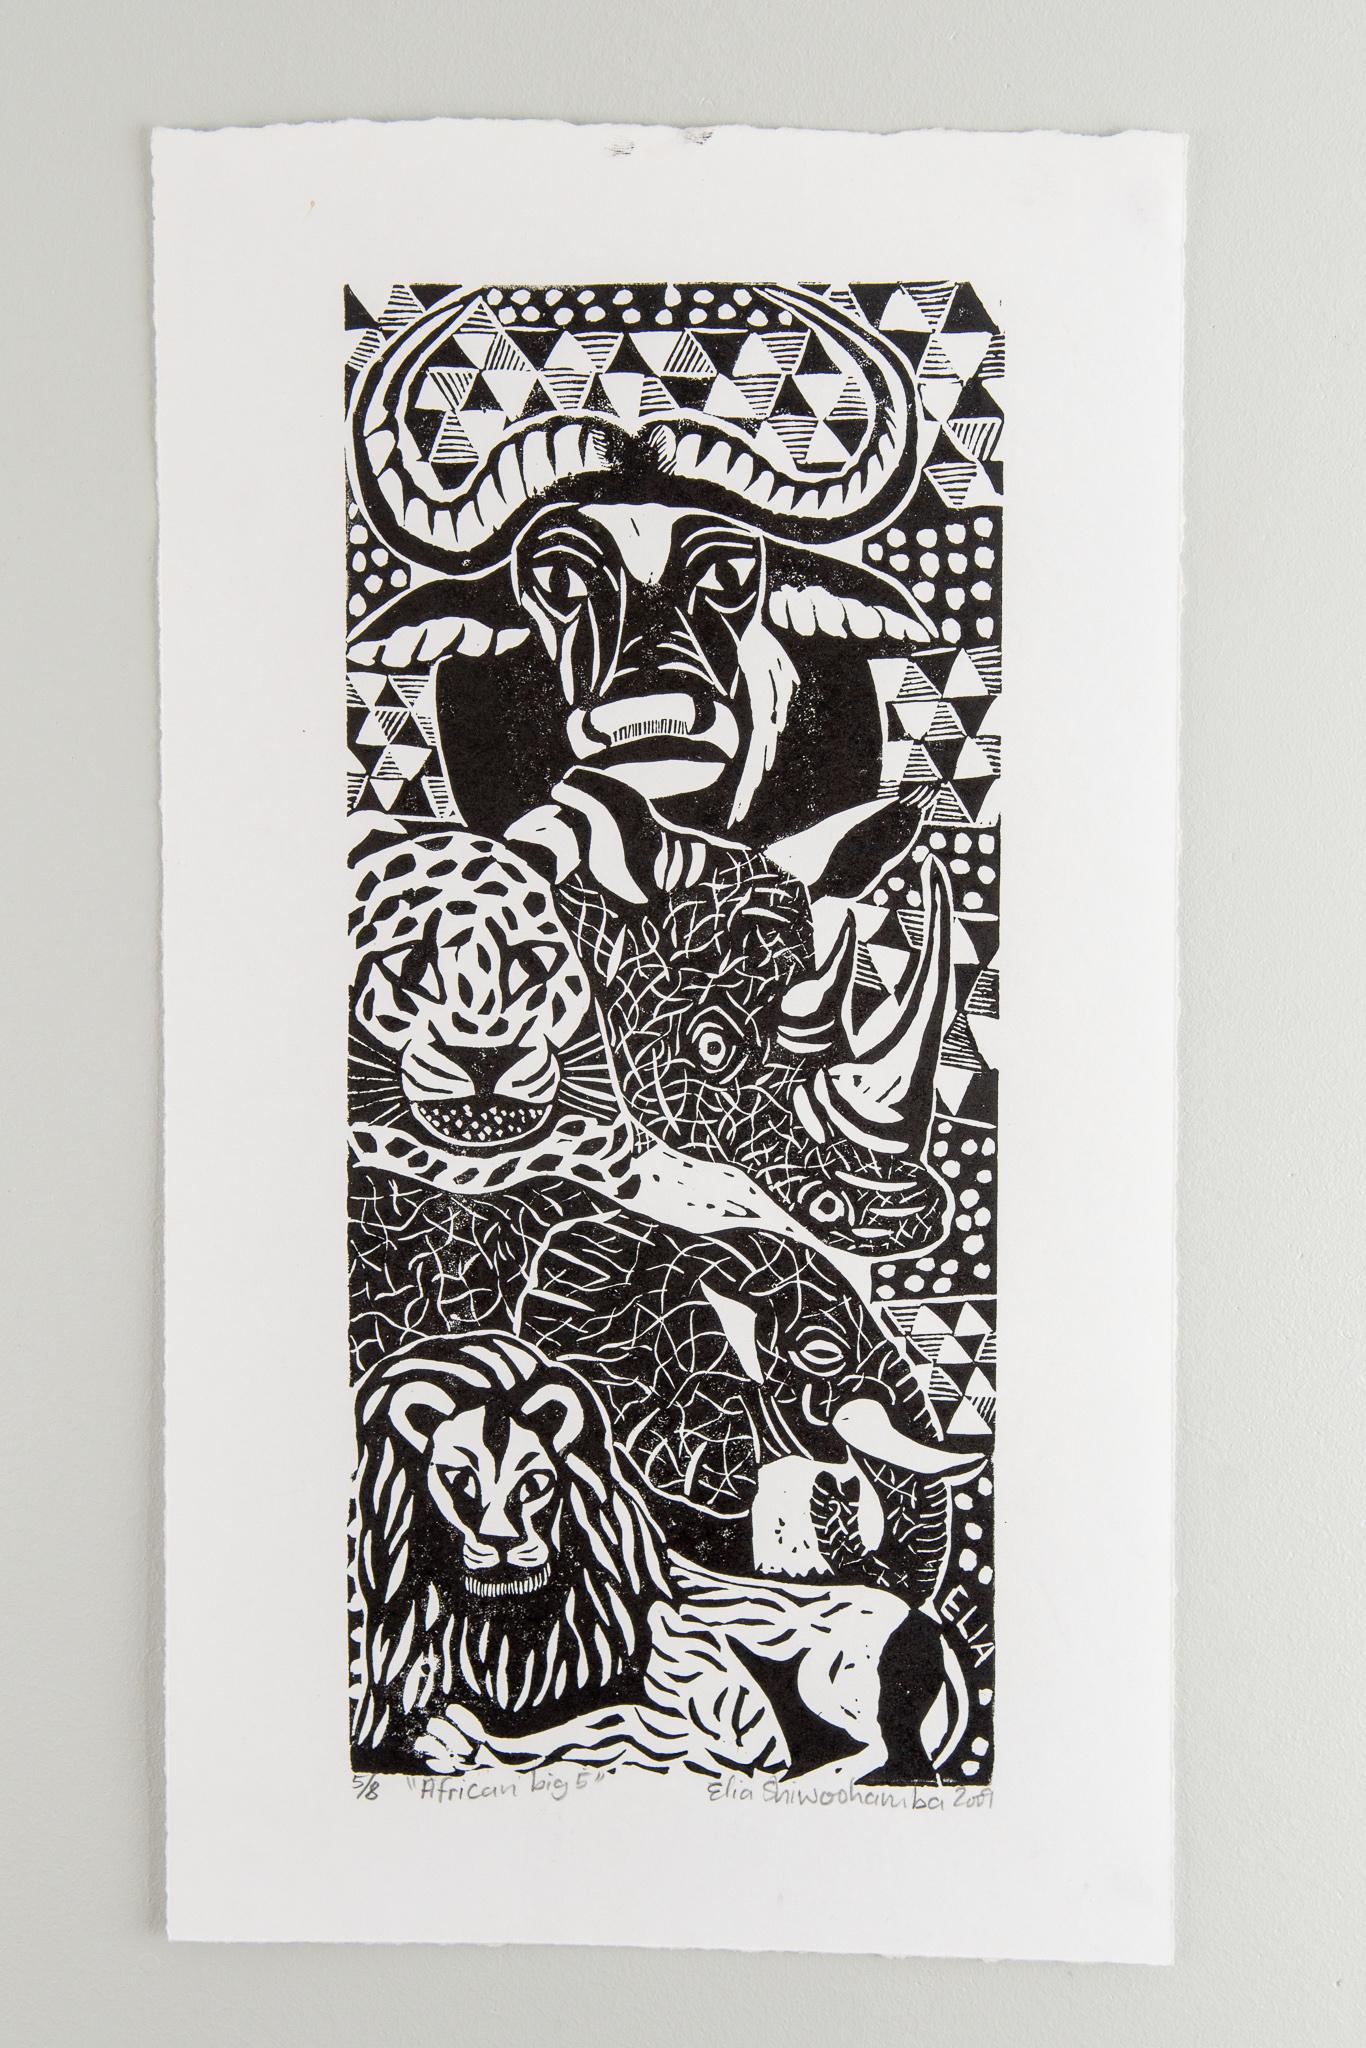 African Big 5, Elia Shiwoohamba, Linoleum block print